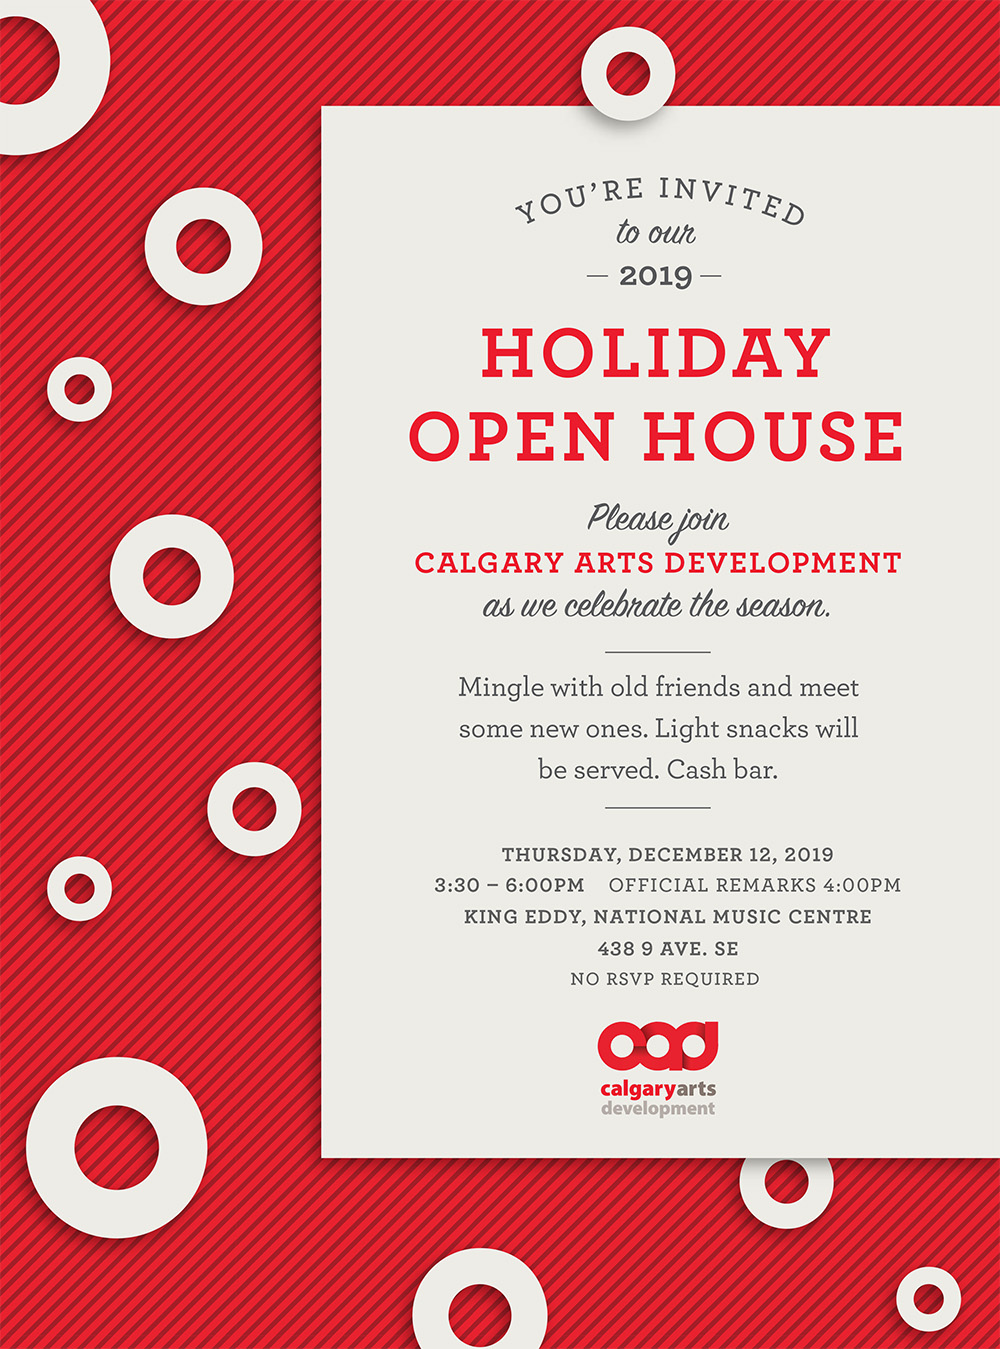 Please join Calgary Arts Development as we celebrate the season